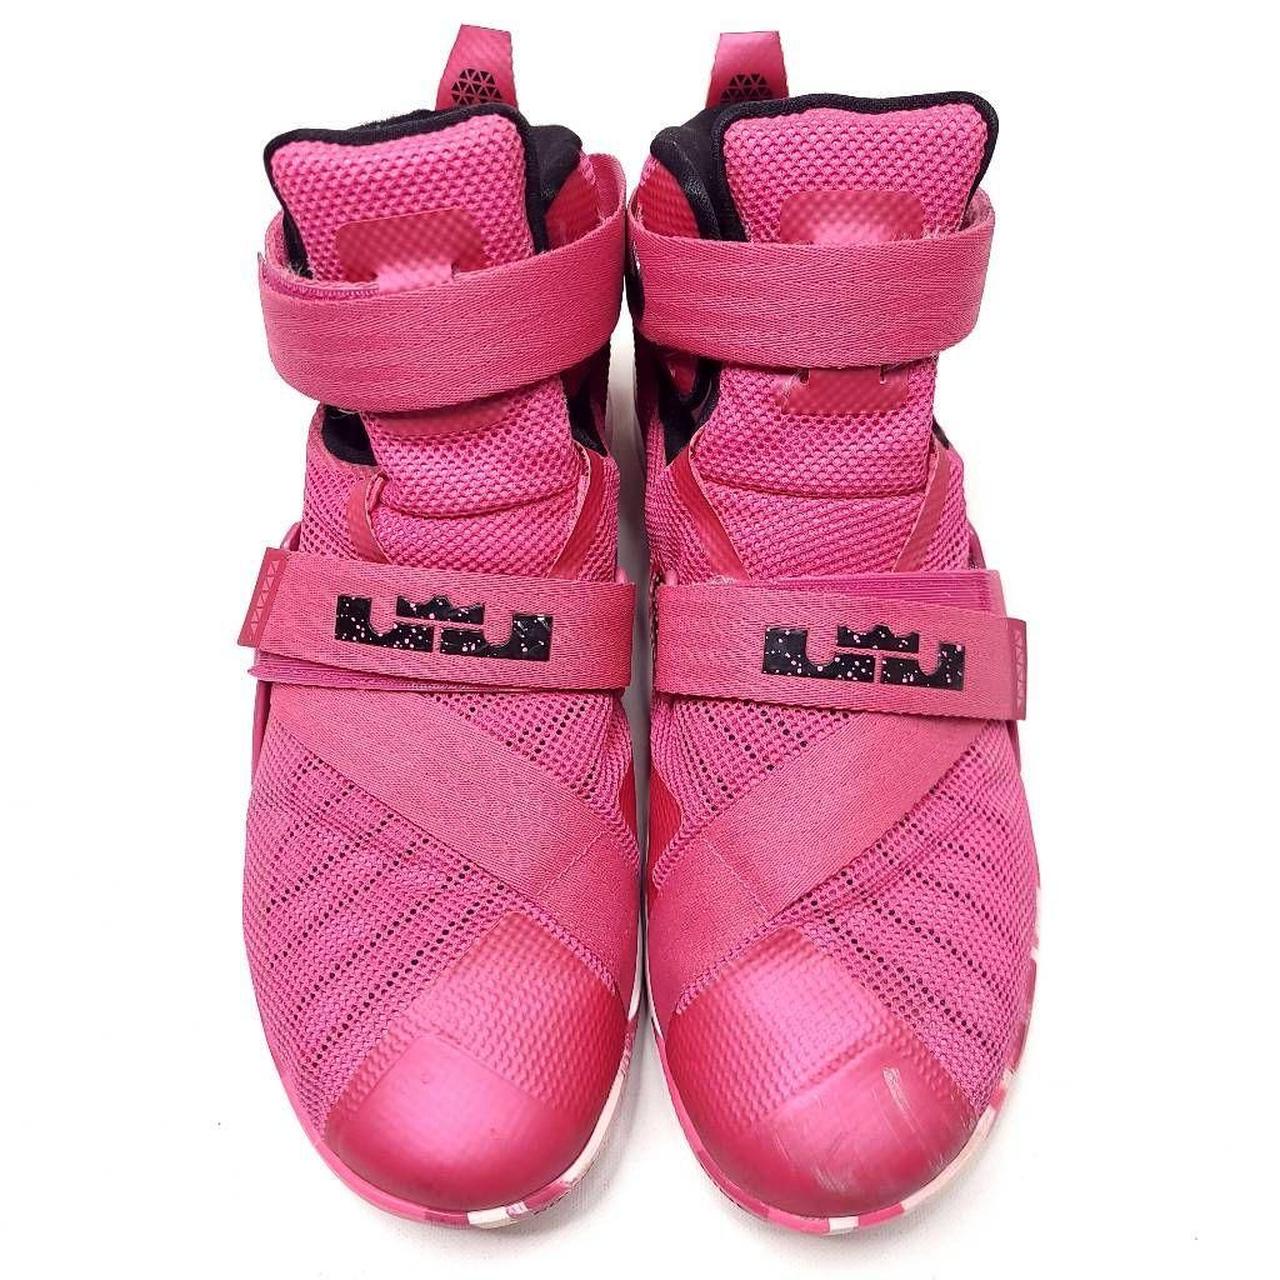 lebron james shoes 9 pink